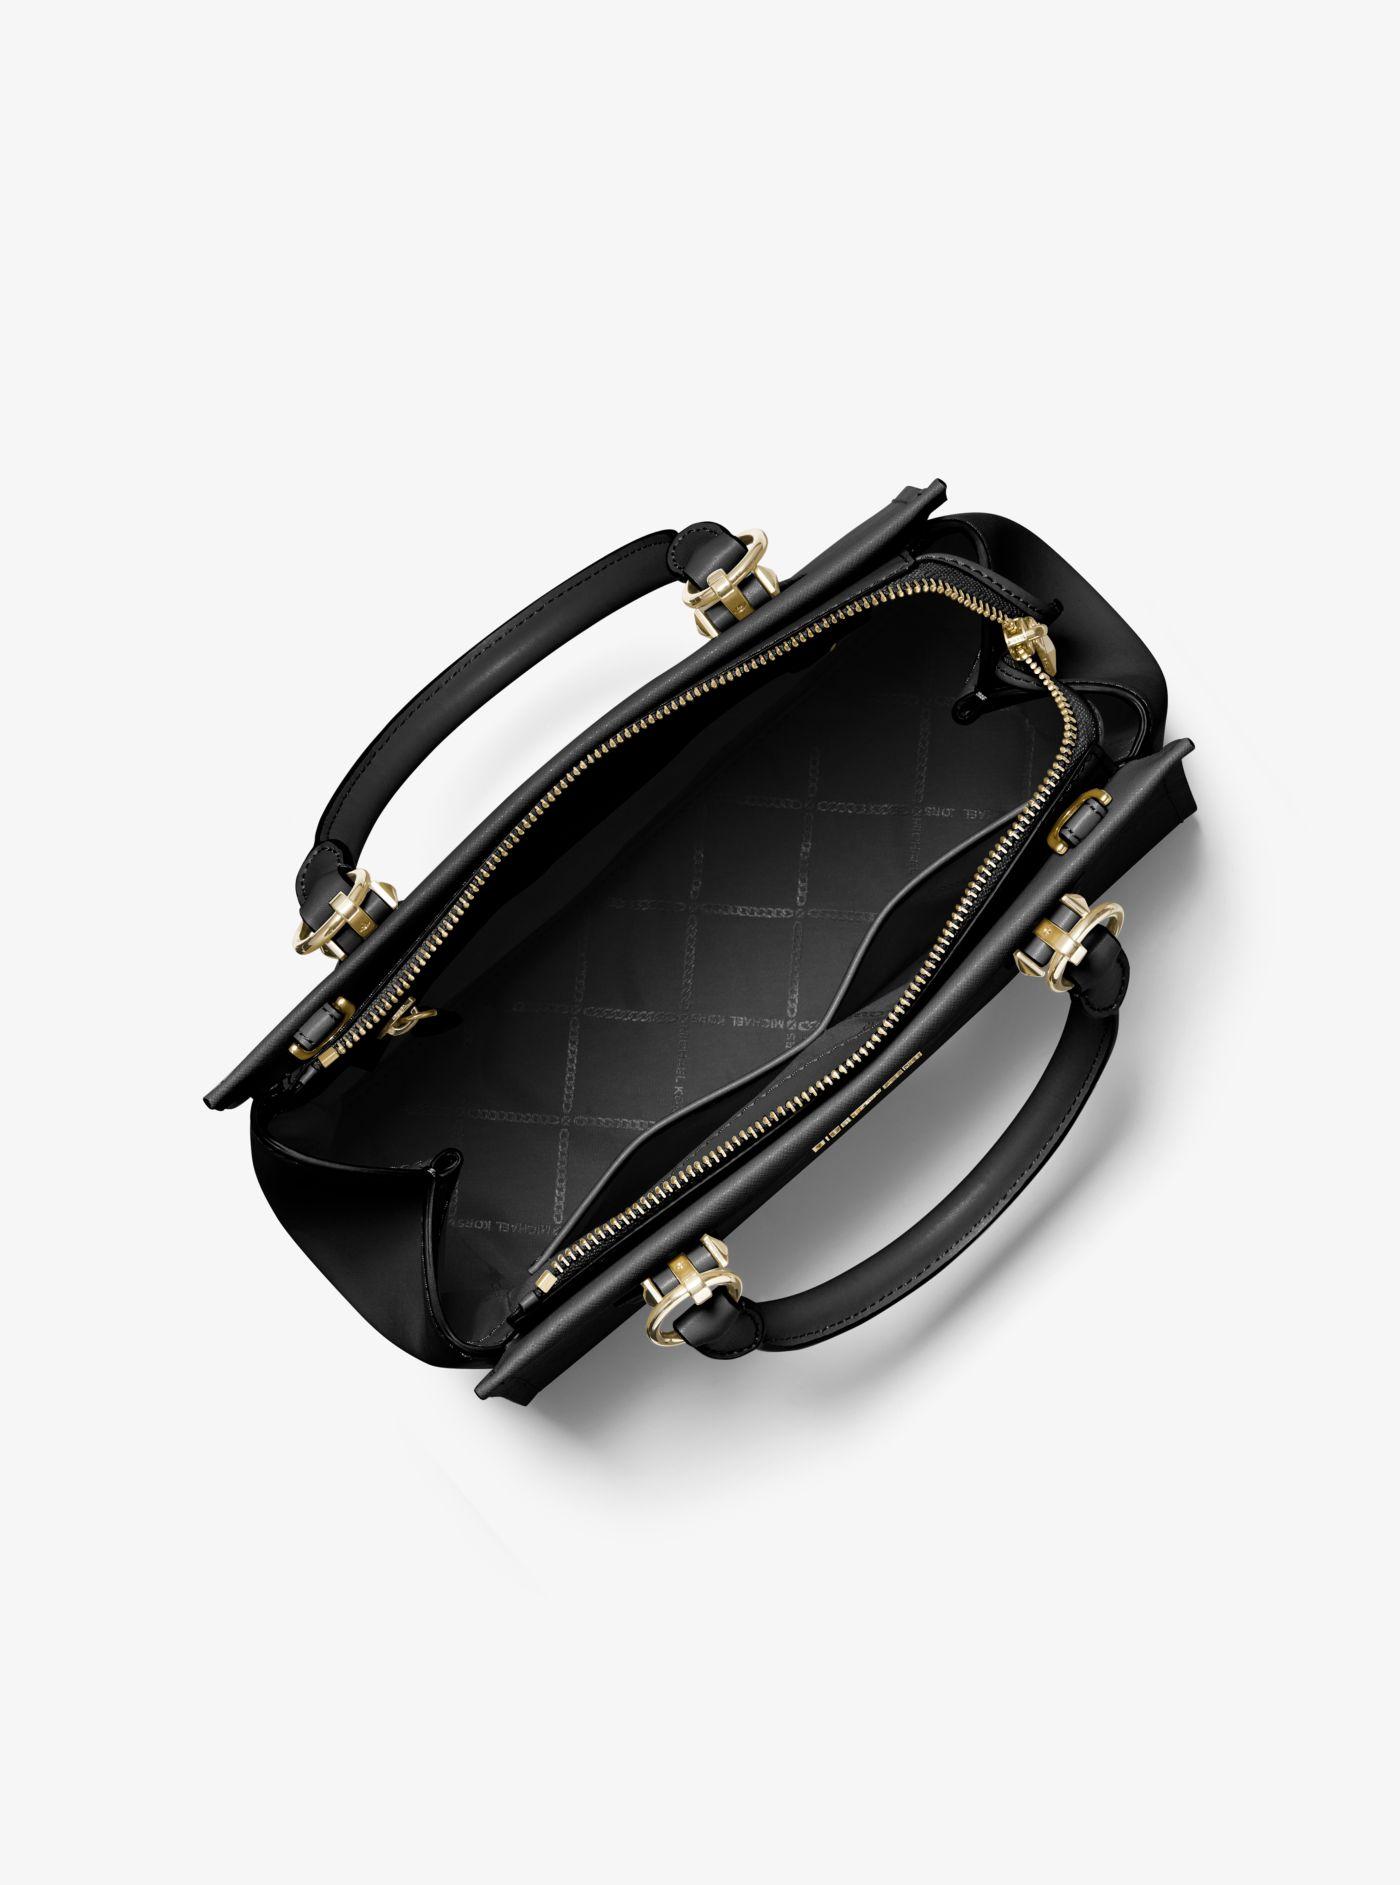 Michael Kors Marilyn Medium Saffiano Leather Satchel in Black | Lyst